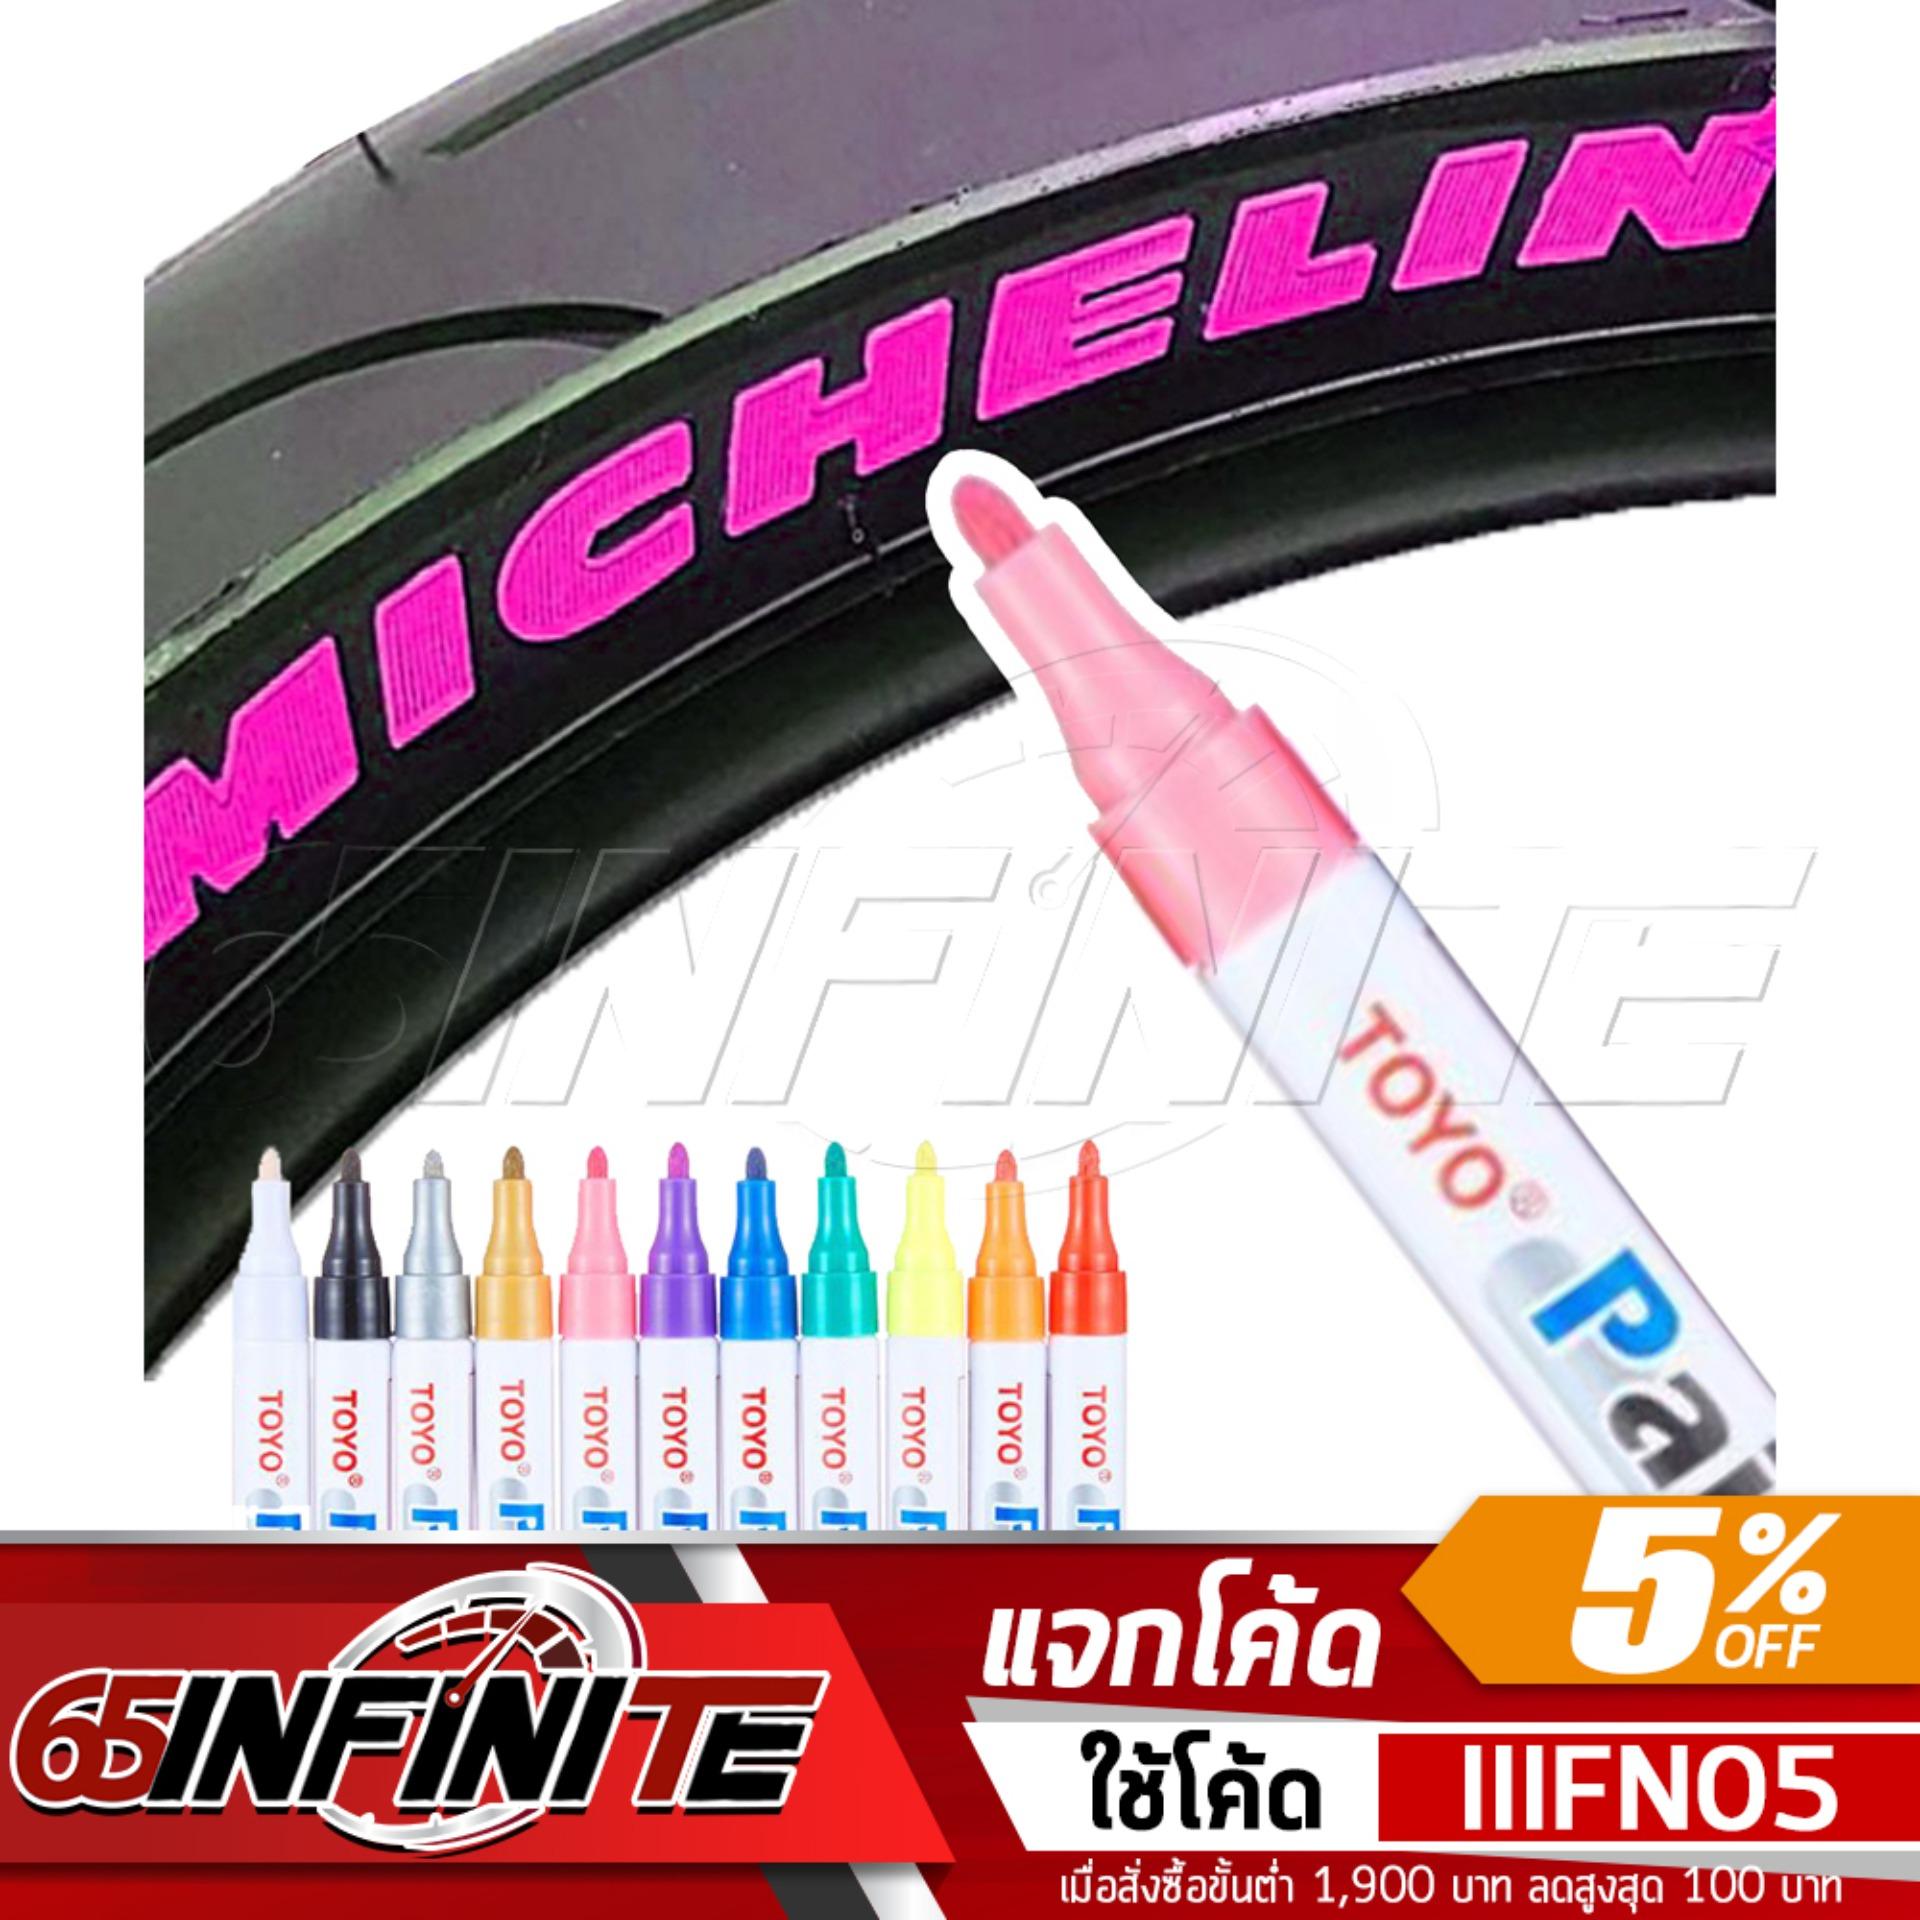 65Infinte TOYO Paint (สีชมพู) ปากกาเขียนยาง ปากกาเขียนล้อ แต้มแม็กซ์ ยางรถยนต์ ล้อรถยนต์ ของแท้จากญี่ปุ่น 100%